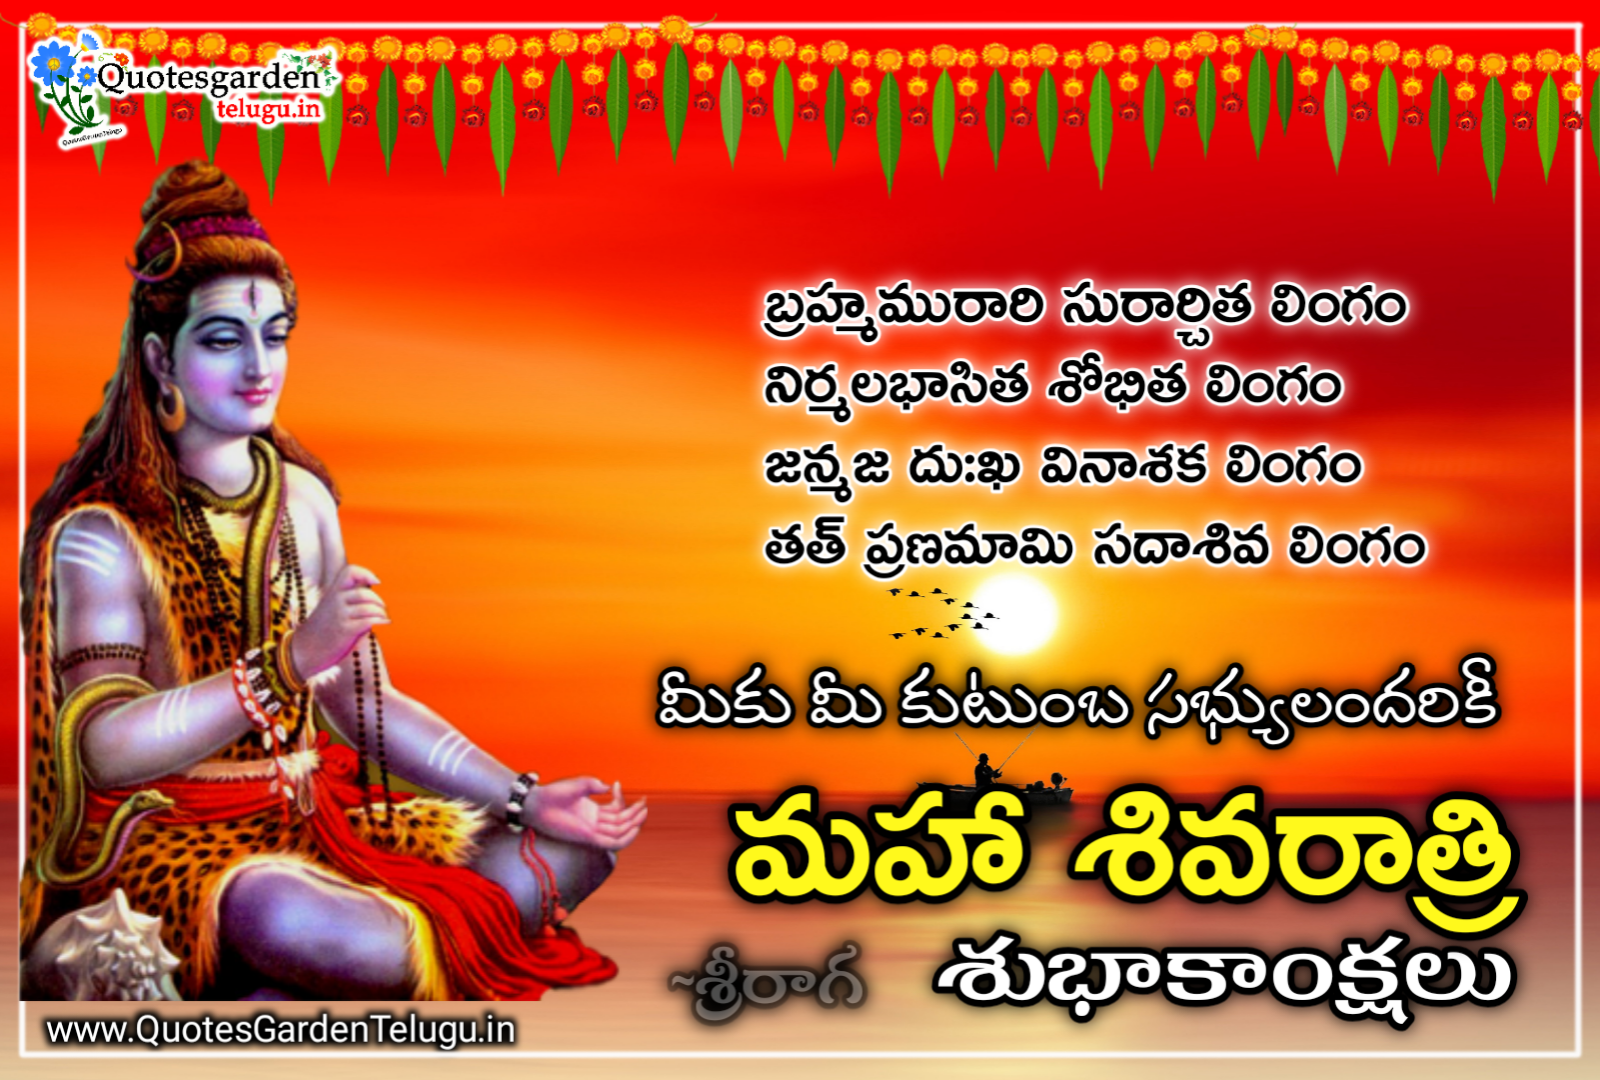 best)}* maha Shivaratri wishes images in Telugu | QUOTES GARDEN ...